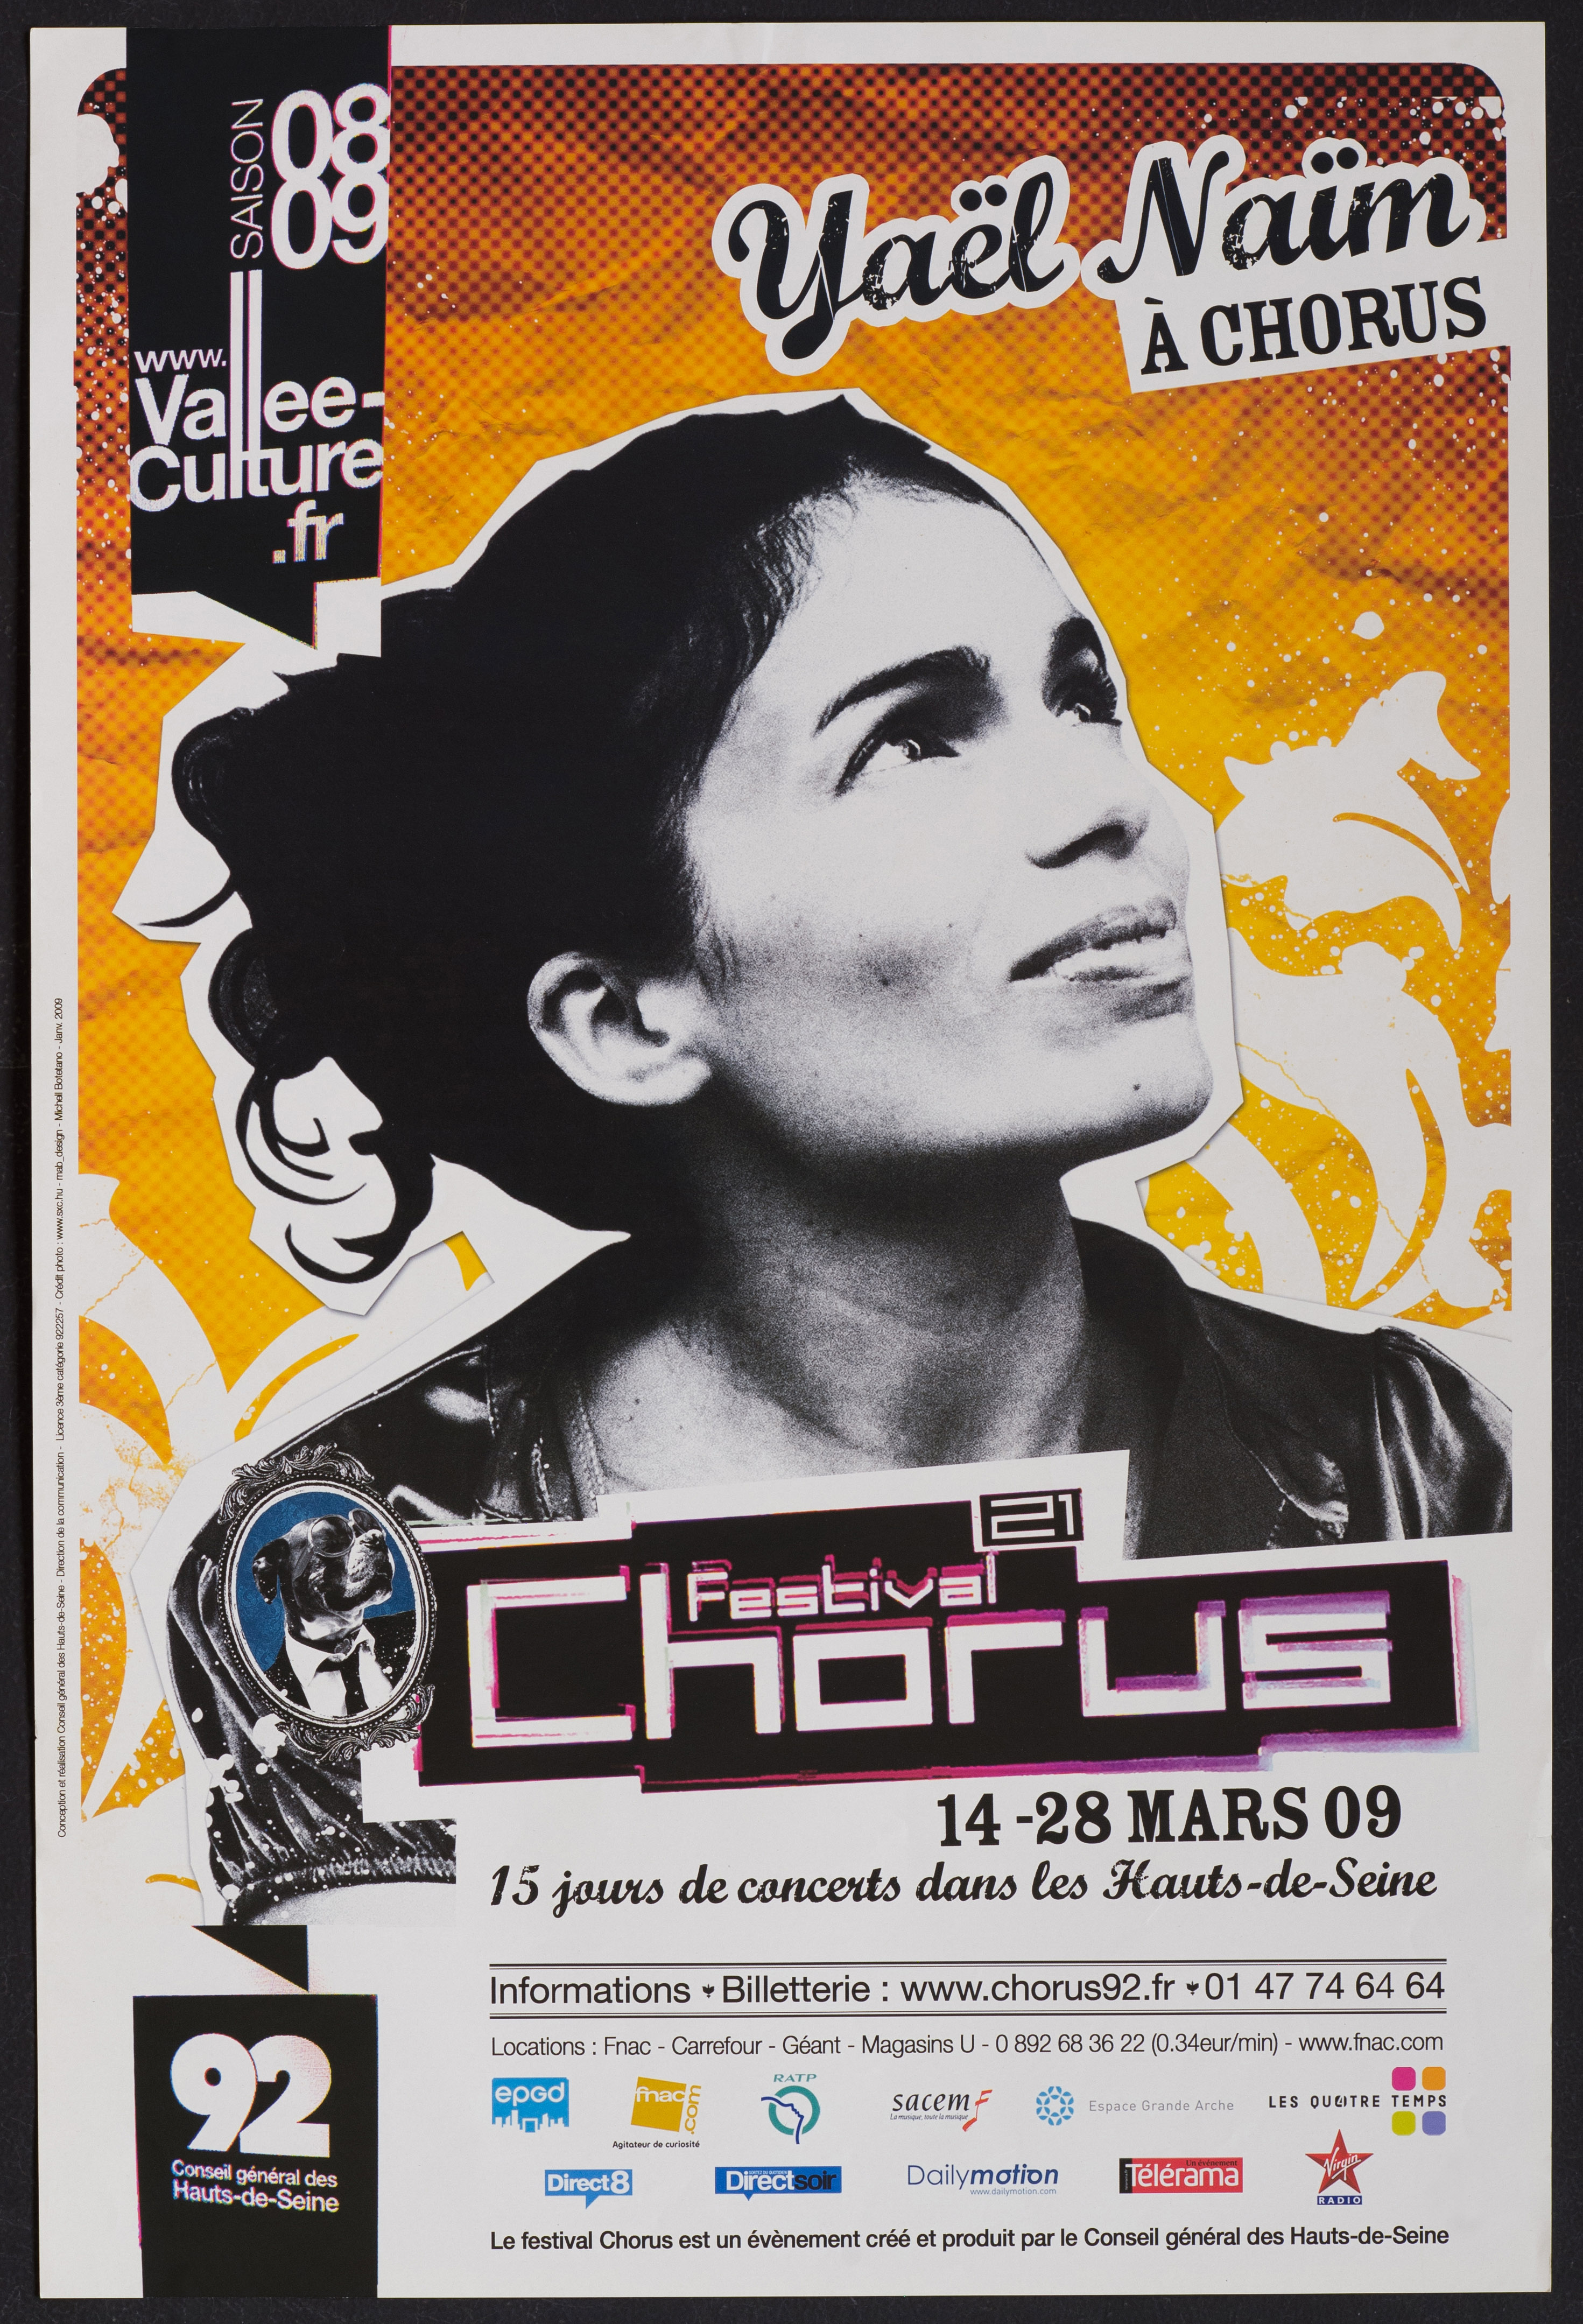 Yaël Naïm à à Chorus. Festival Chorus 21e édition 14-28 mars 09 […]. - CG 92, 2009. - 1 affiche ill. coul., 60 x 40 cm.